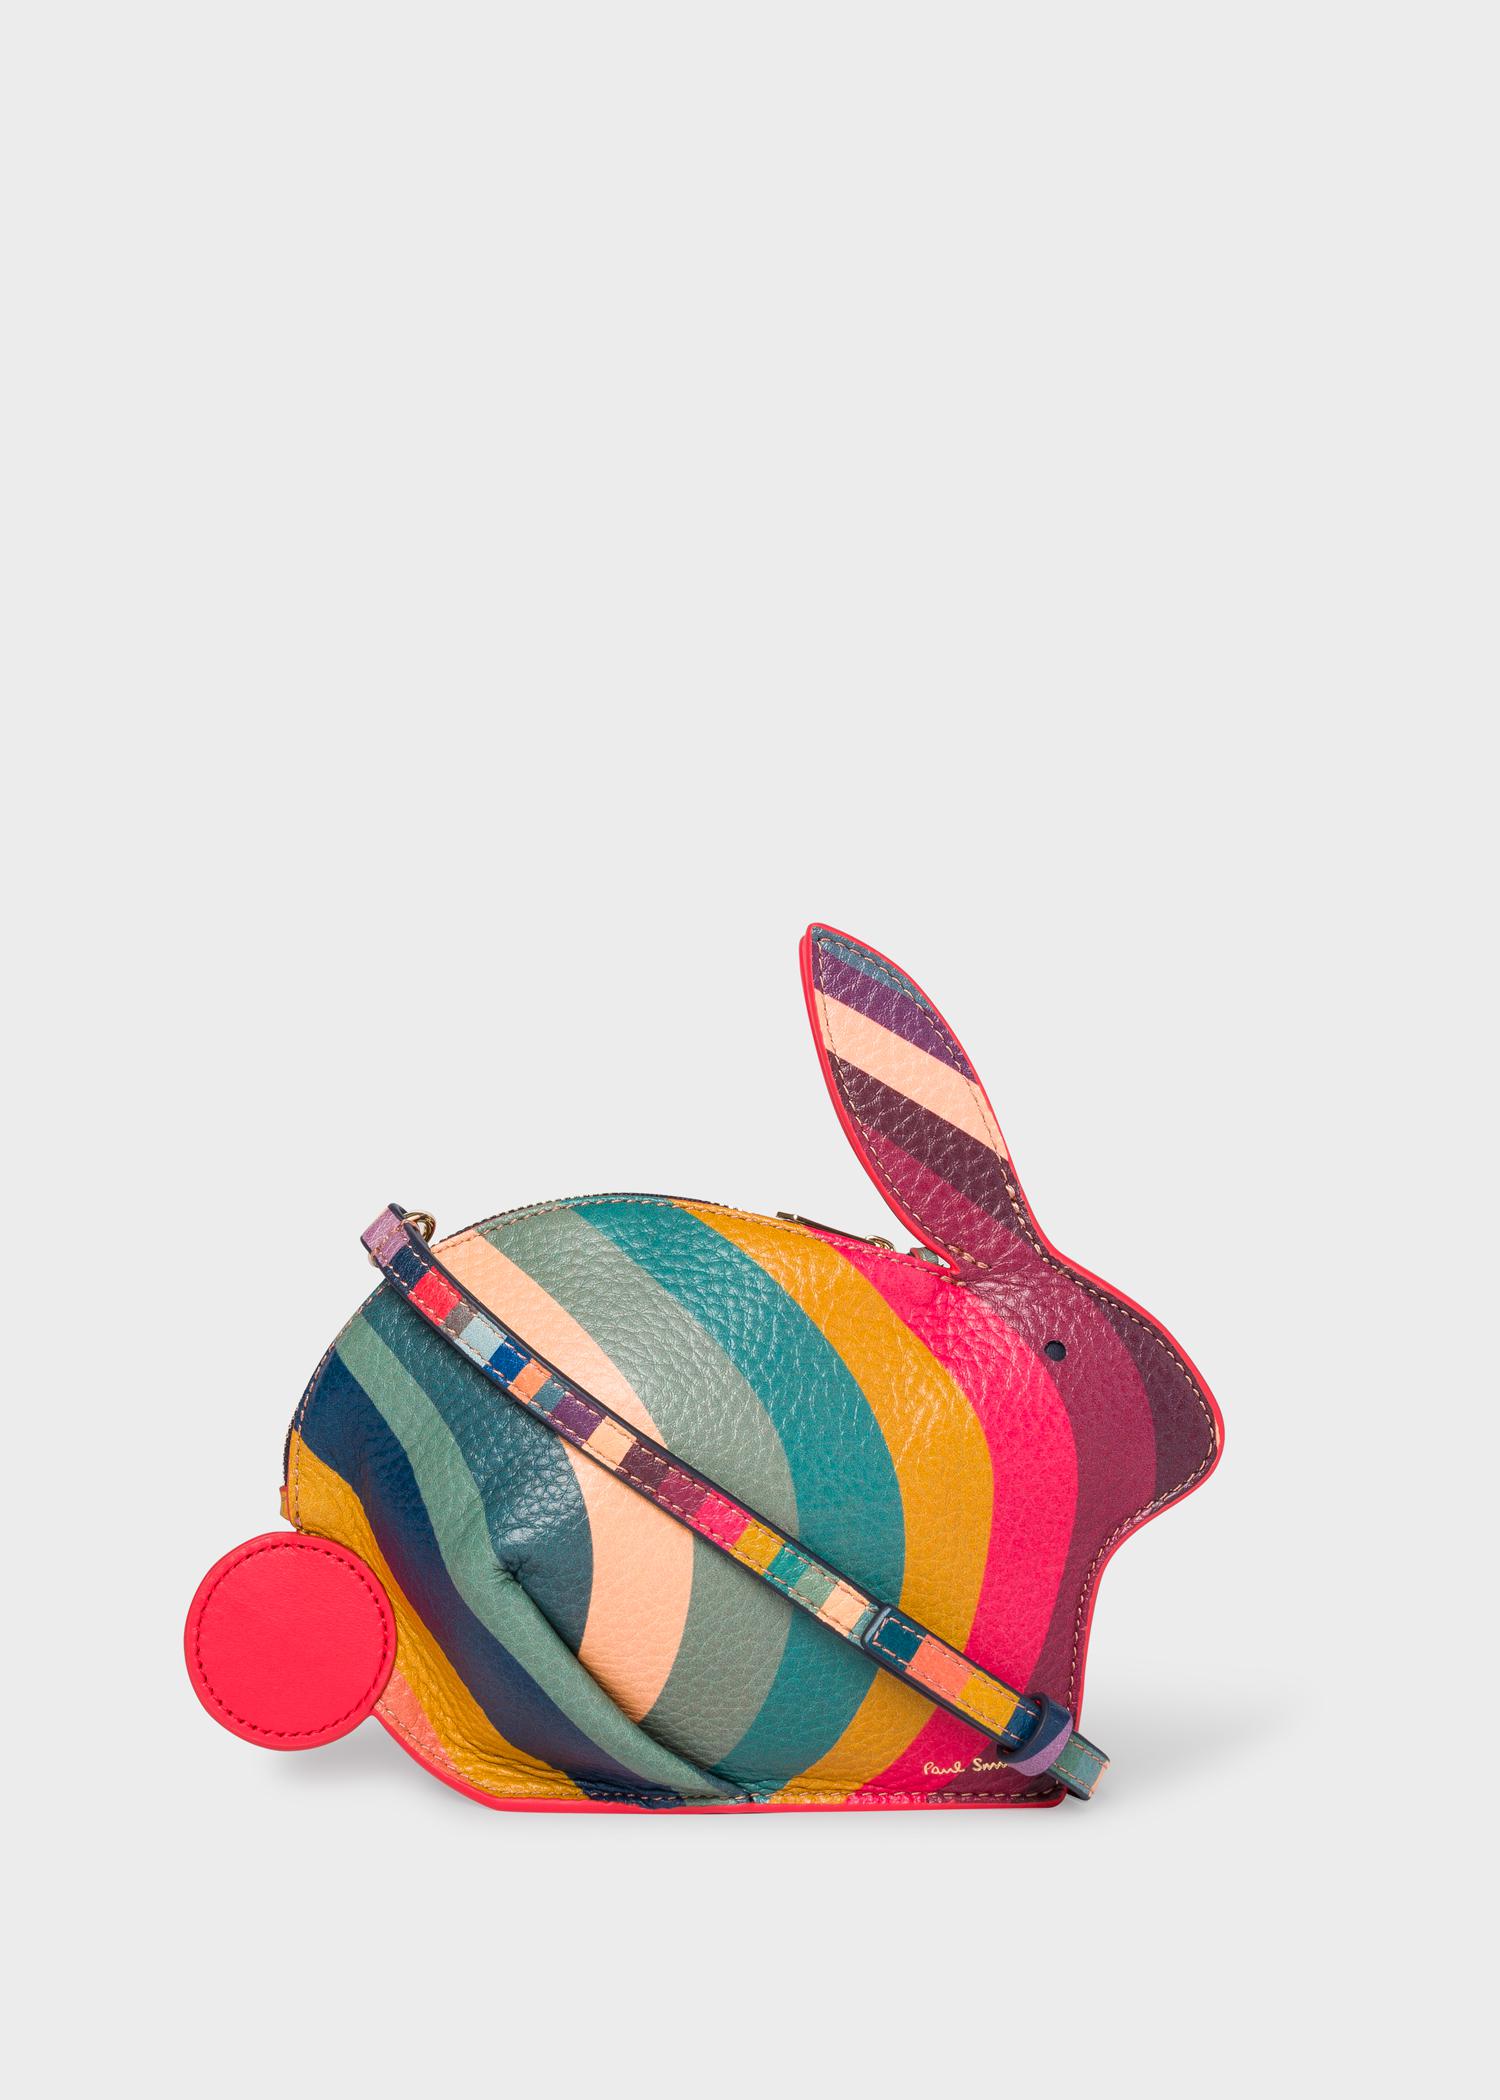 Paul Smith 'Swirl' Print Leather 'Rabbit' Cross-Body Bag - Lyst